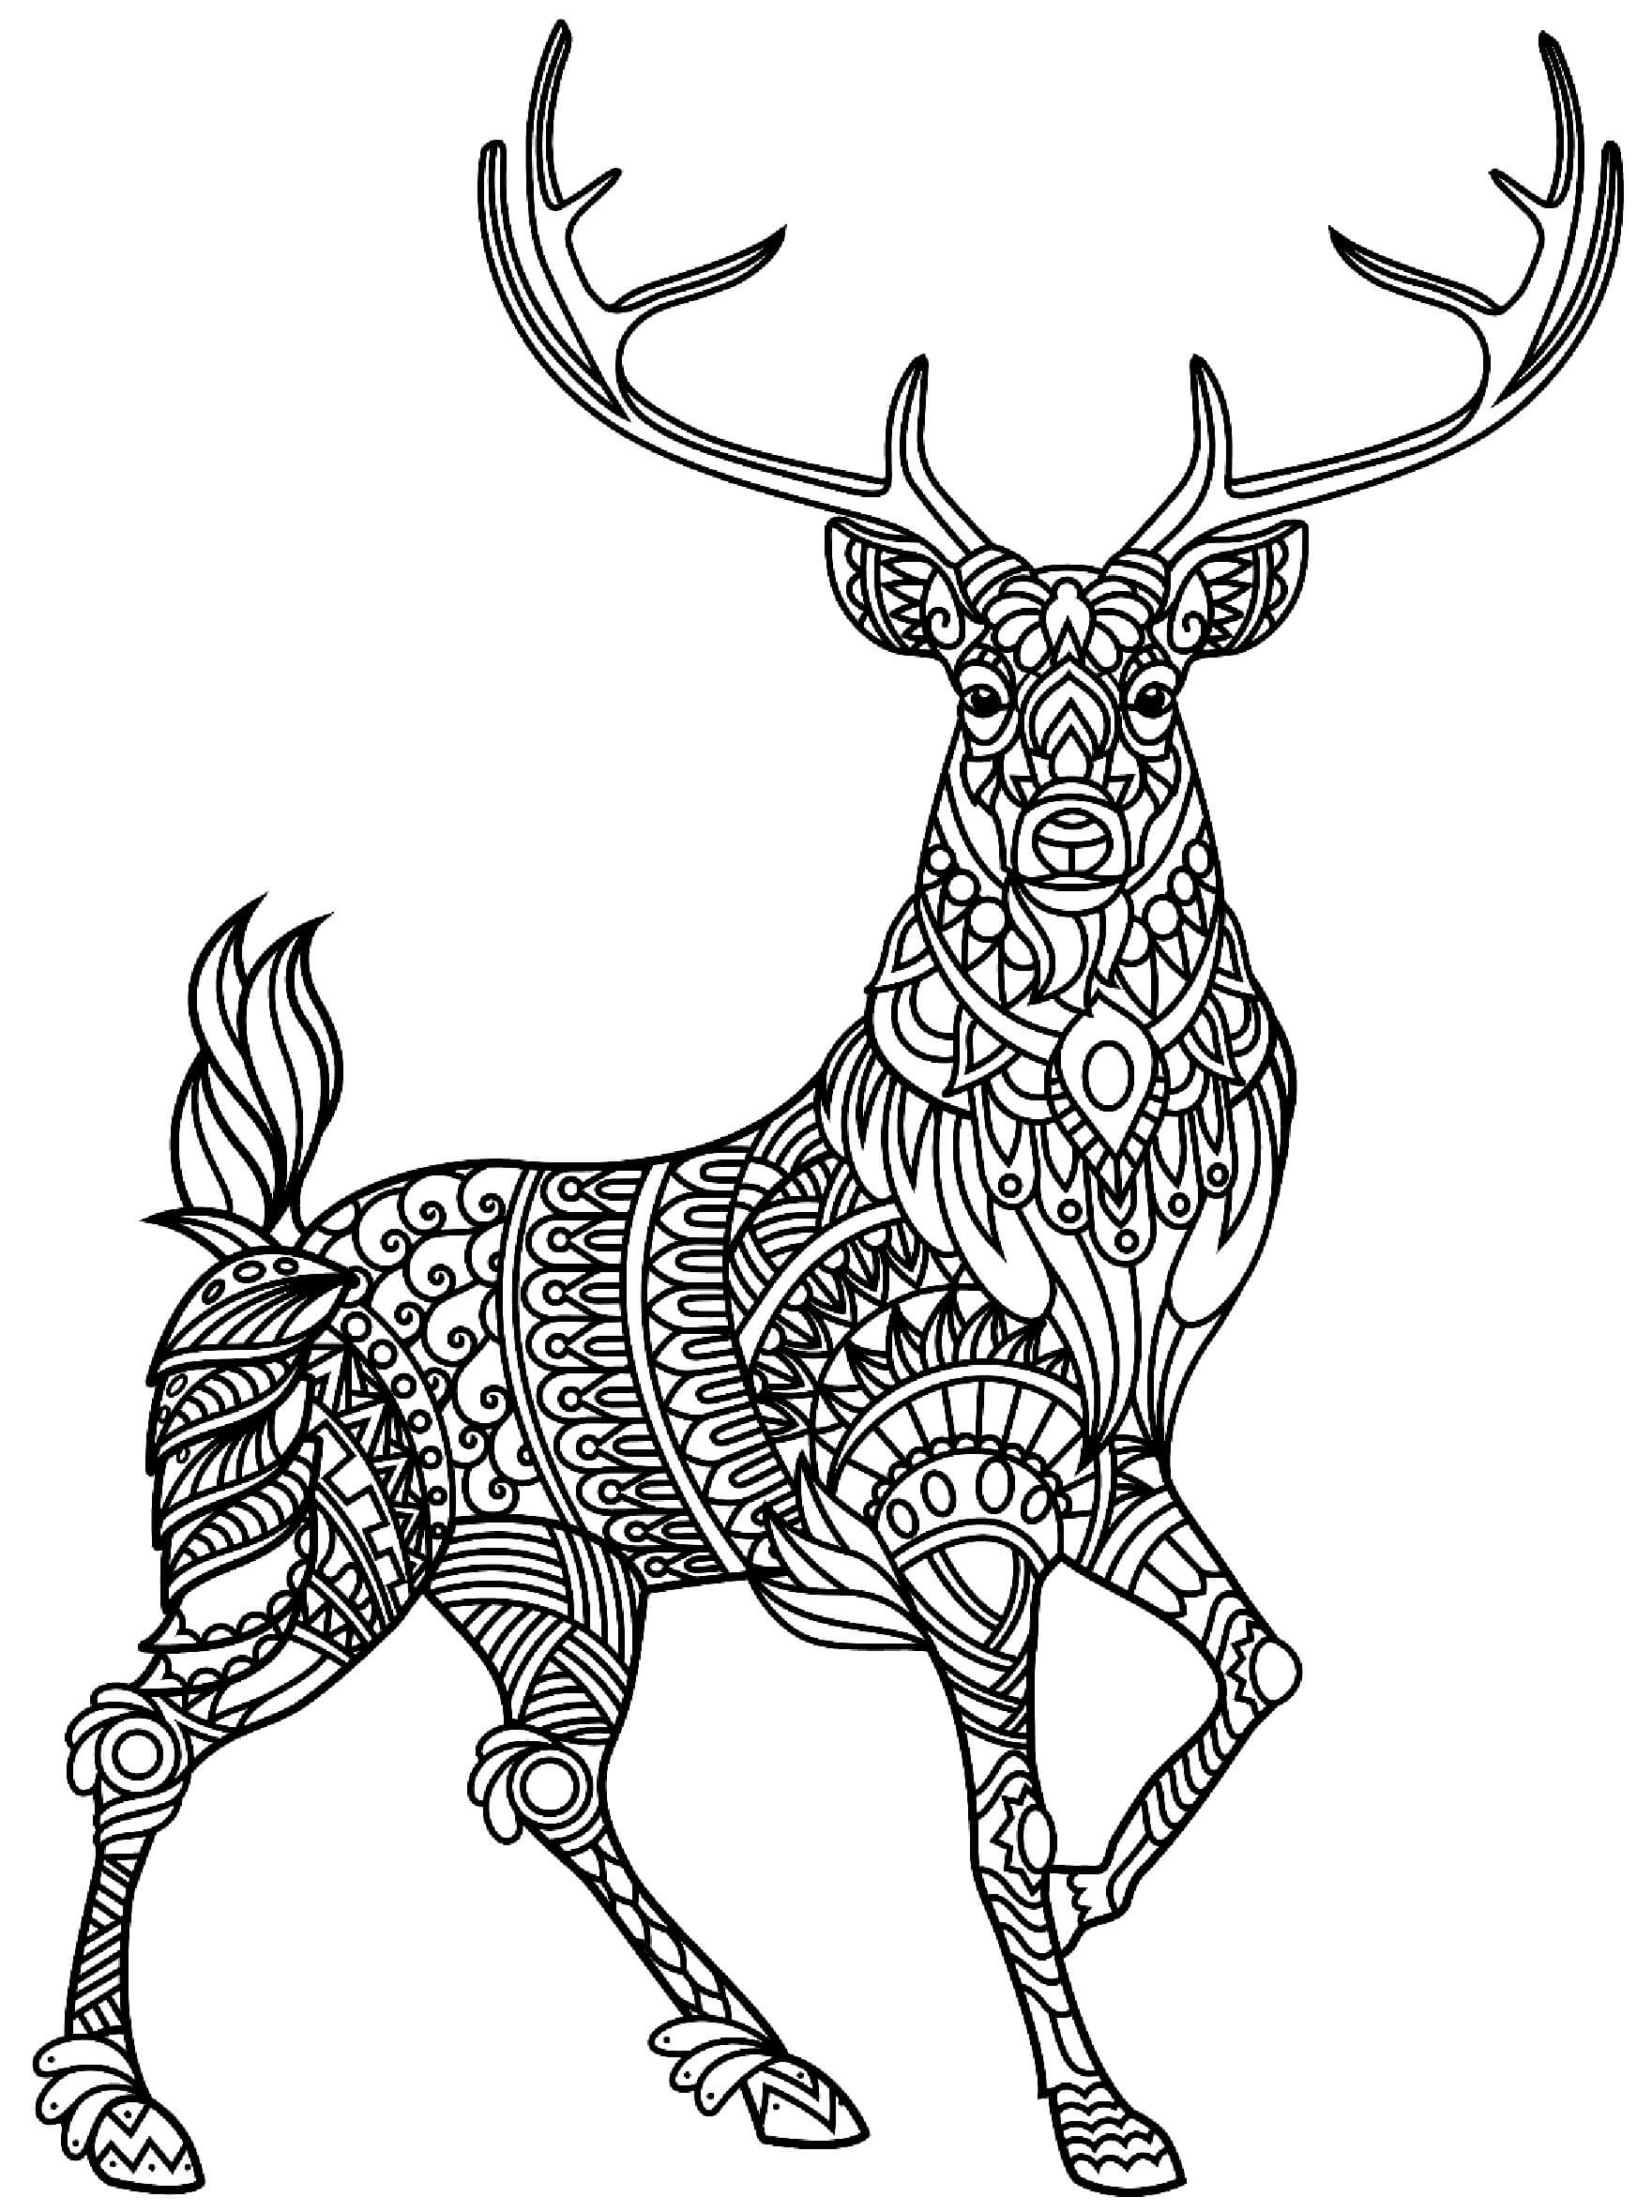 Mandala Deer Coloring Page - Sheet 6 Mandalas